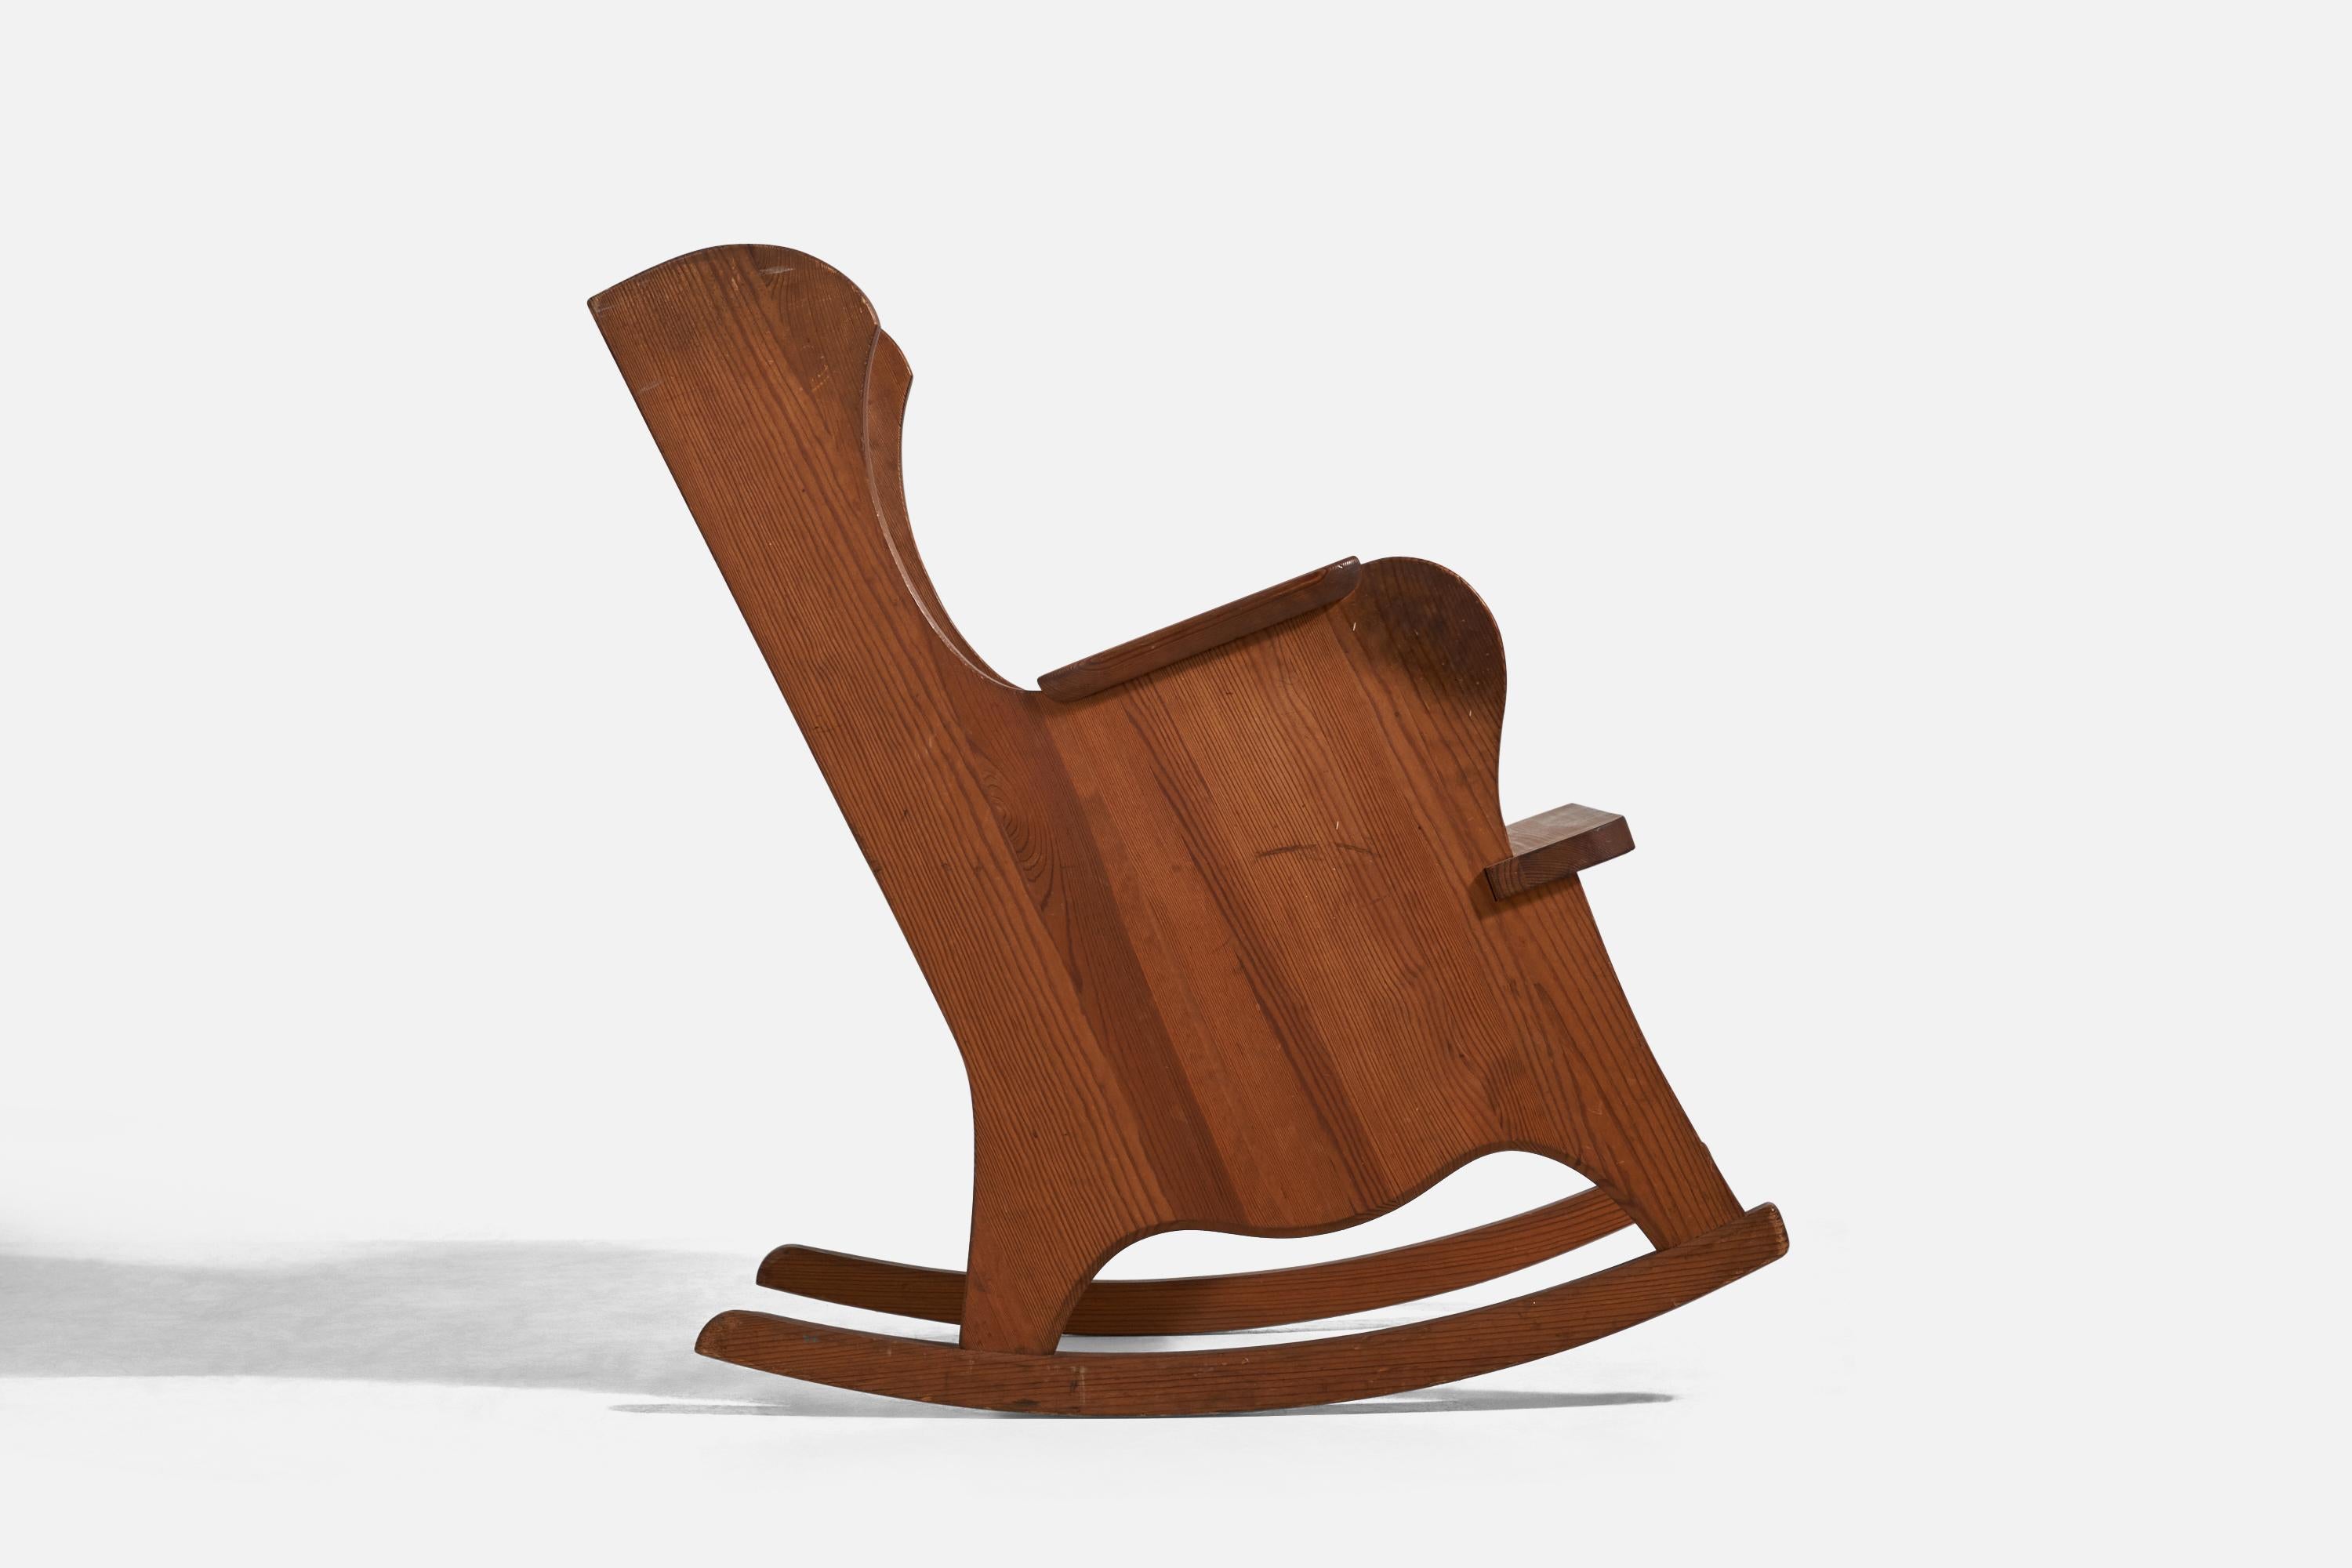 Scandinavian Modern Axel Einar Hjorth, Rocking Chair, Pine, Nordiska Kompaniet, Sweden, 1930s